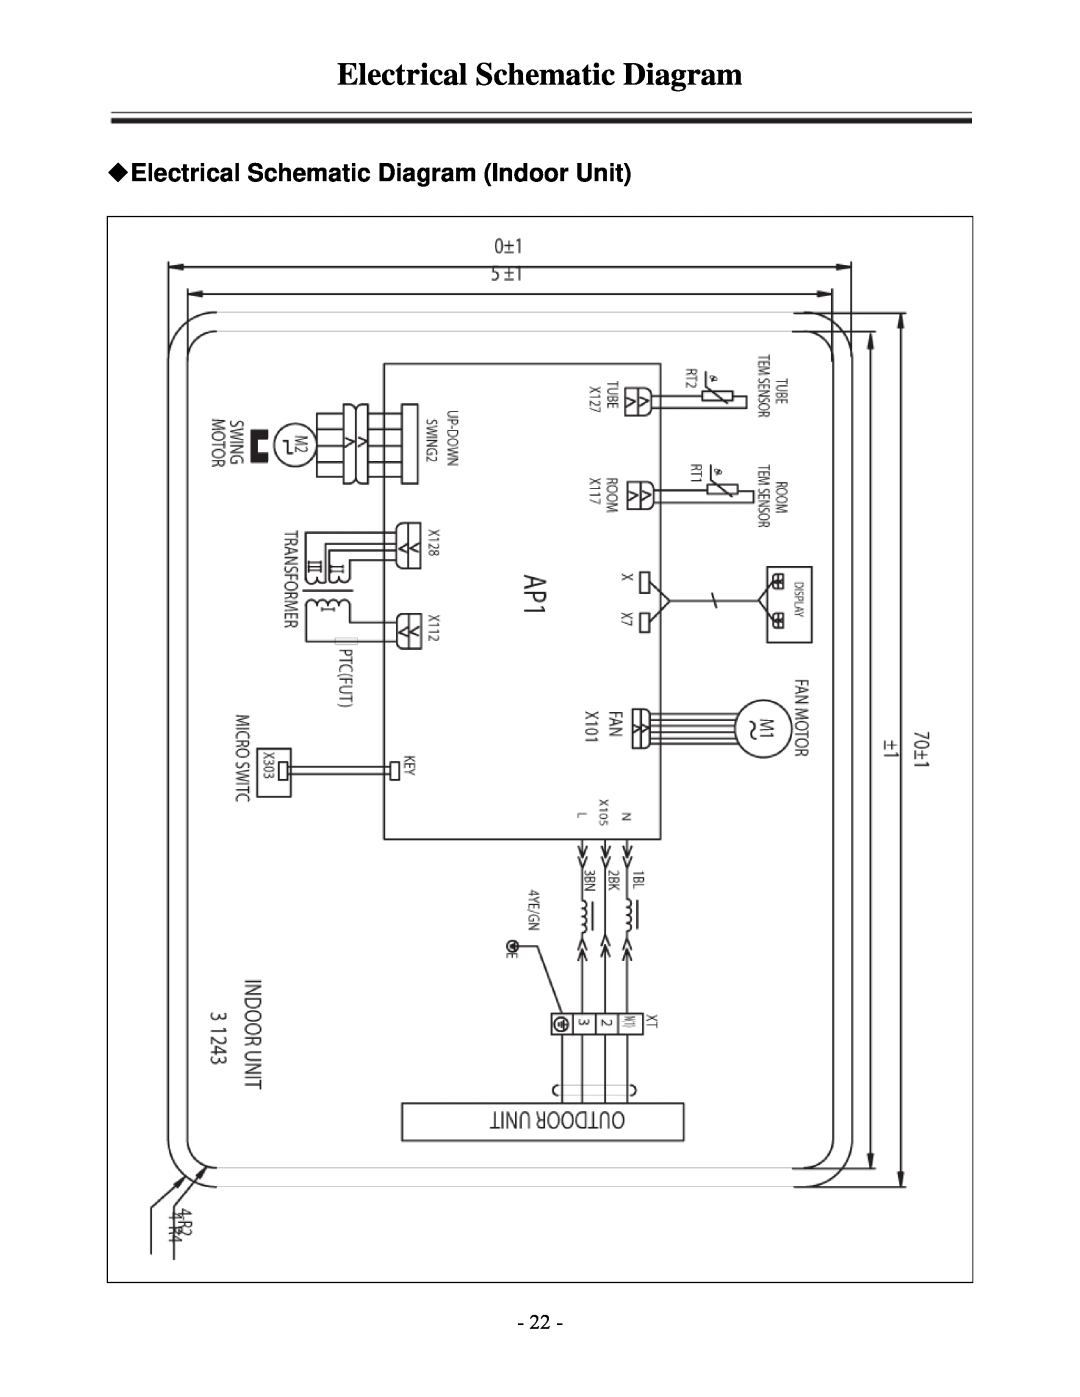 Soleus Air KFHHP-18-ID, KFHHP-18-OD installation manual Electrical Schematic Diagram Indoor Unit 